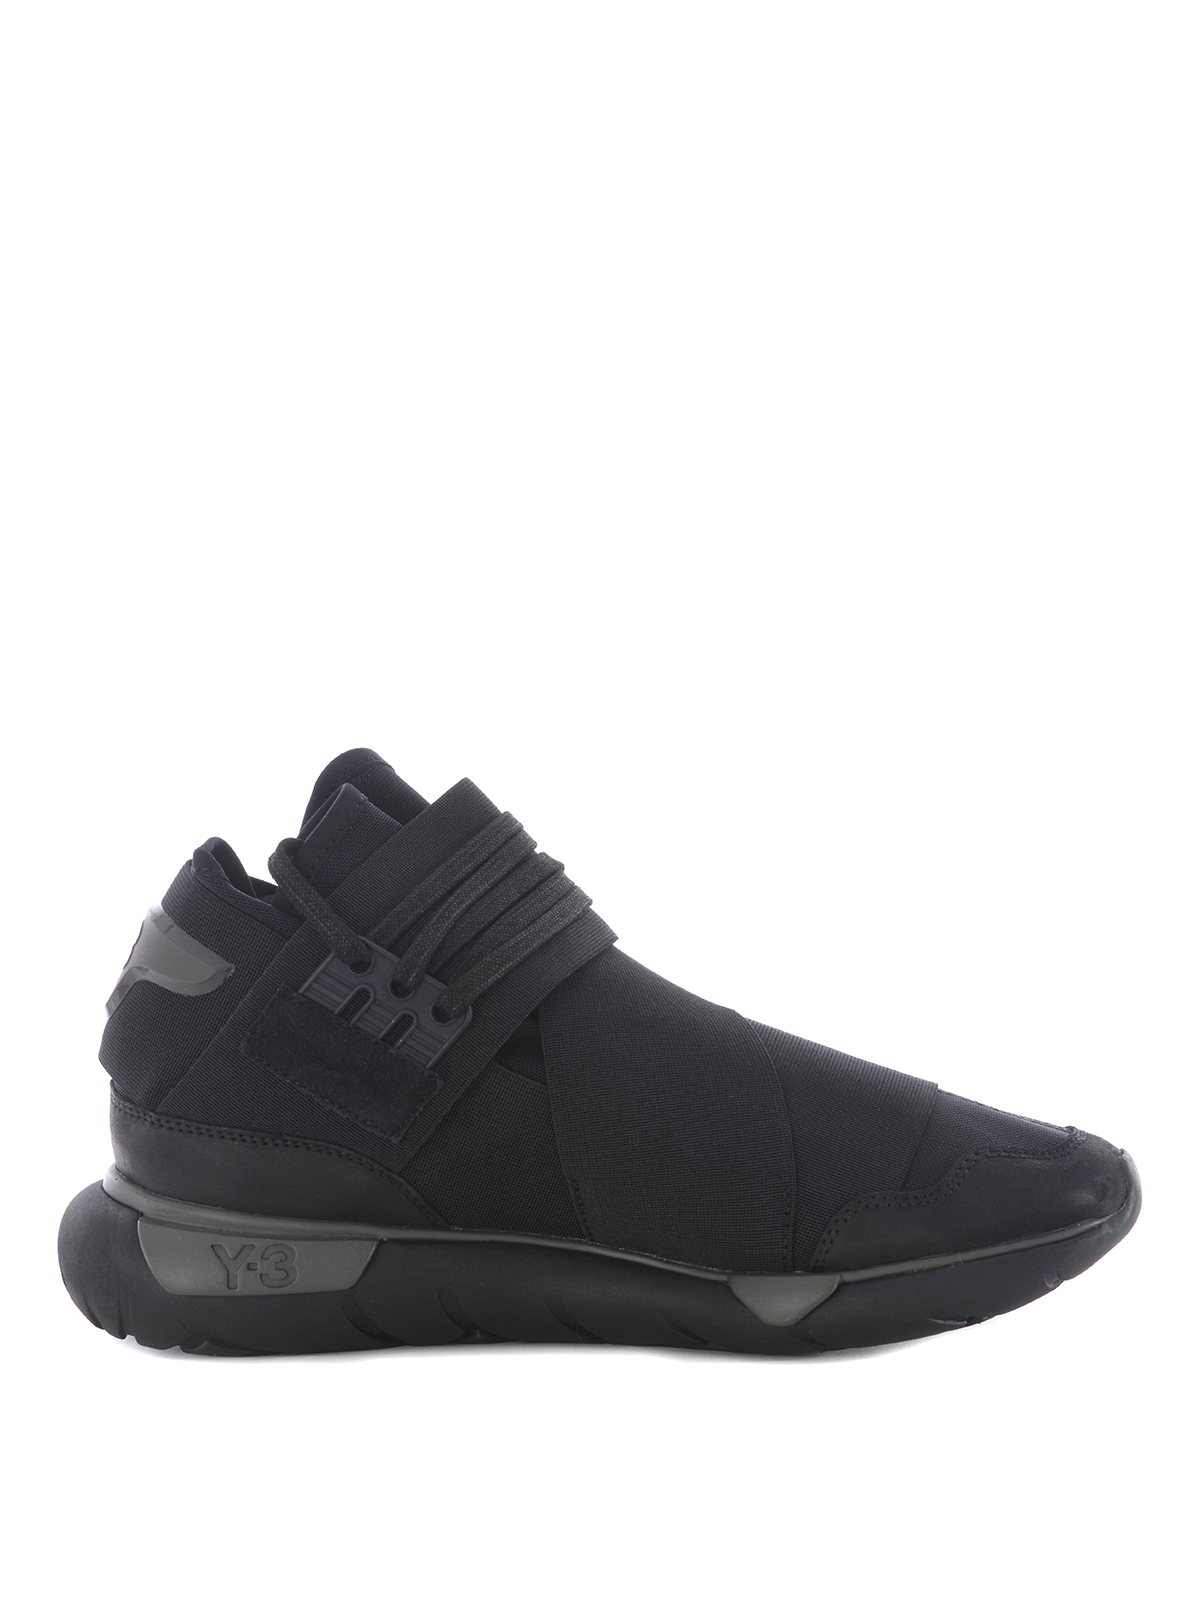 Adidas Y-3 - Qasa elastic bands sneakers - CP9854